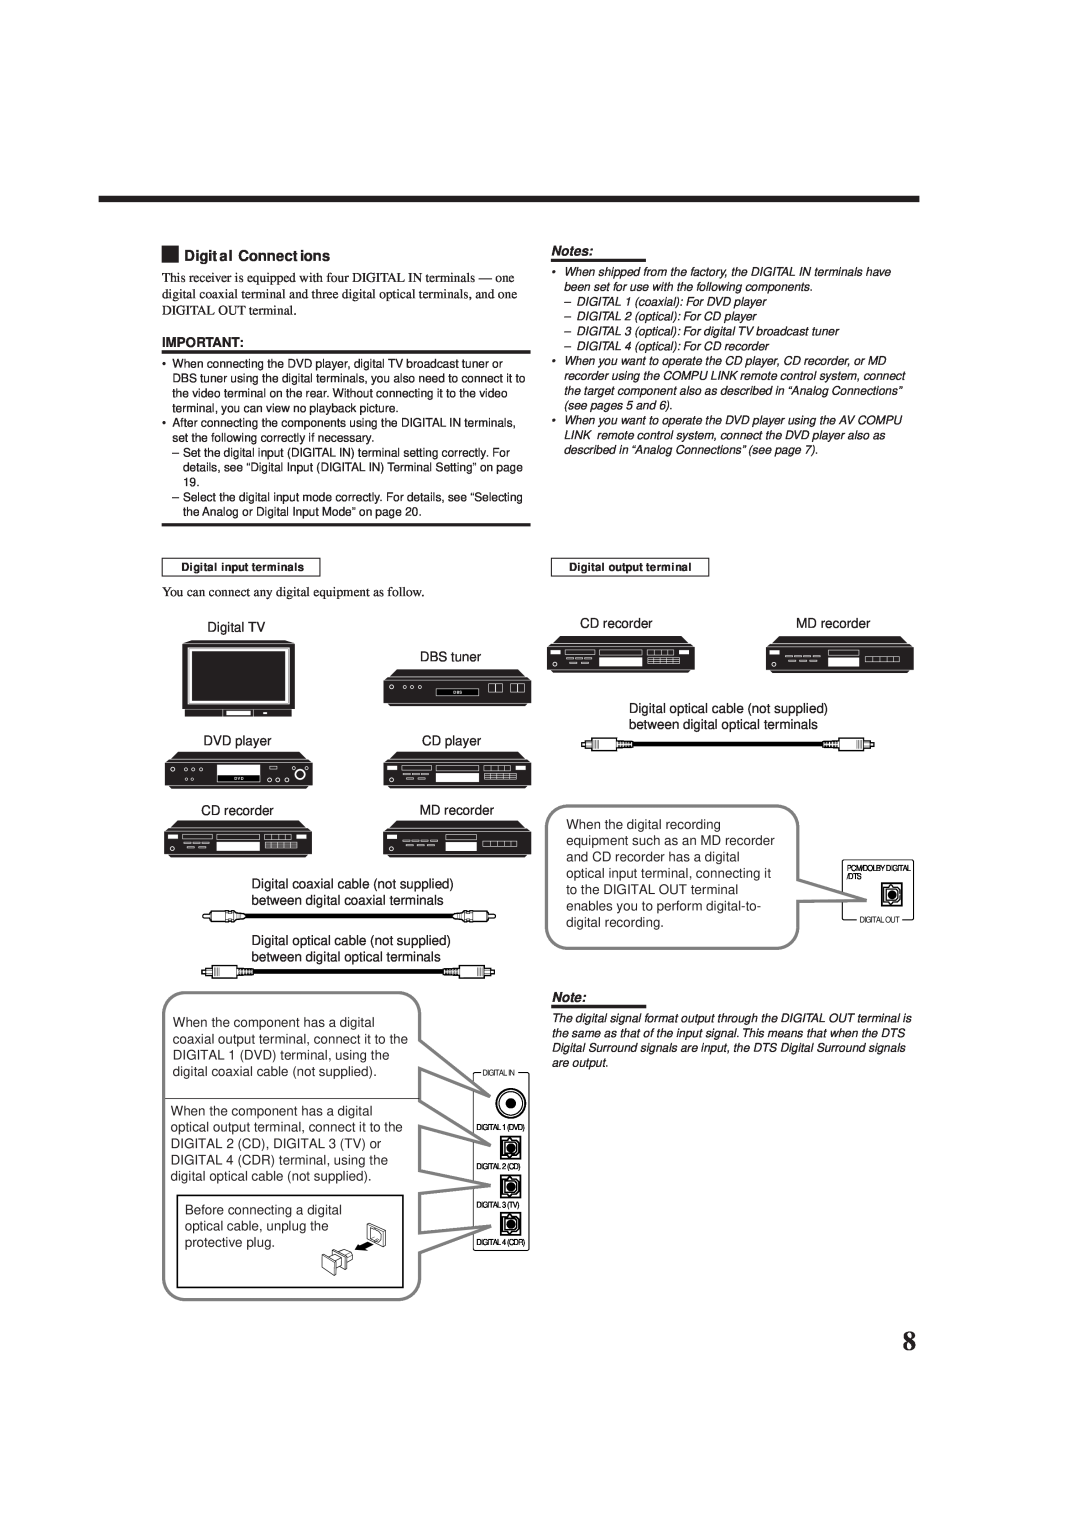 JVC rx-8010vbk manual Digital Connections, Digital input terminals, Digital output terminal 